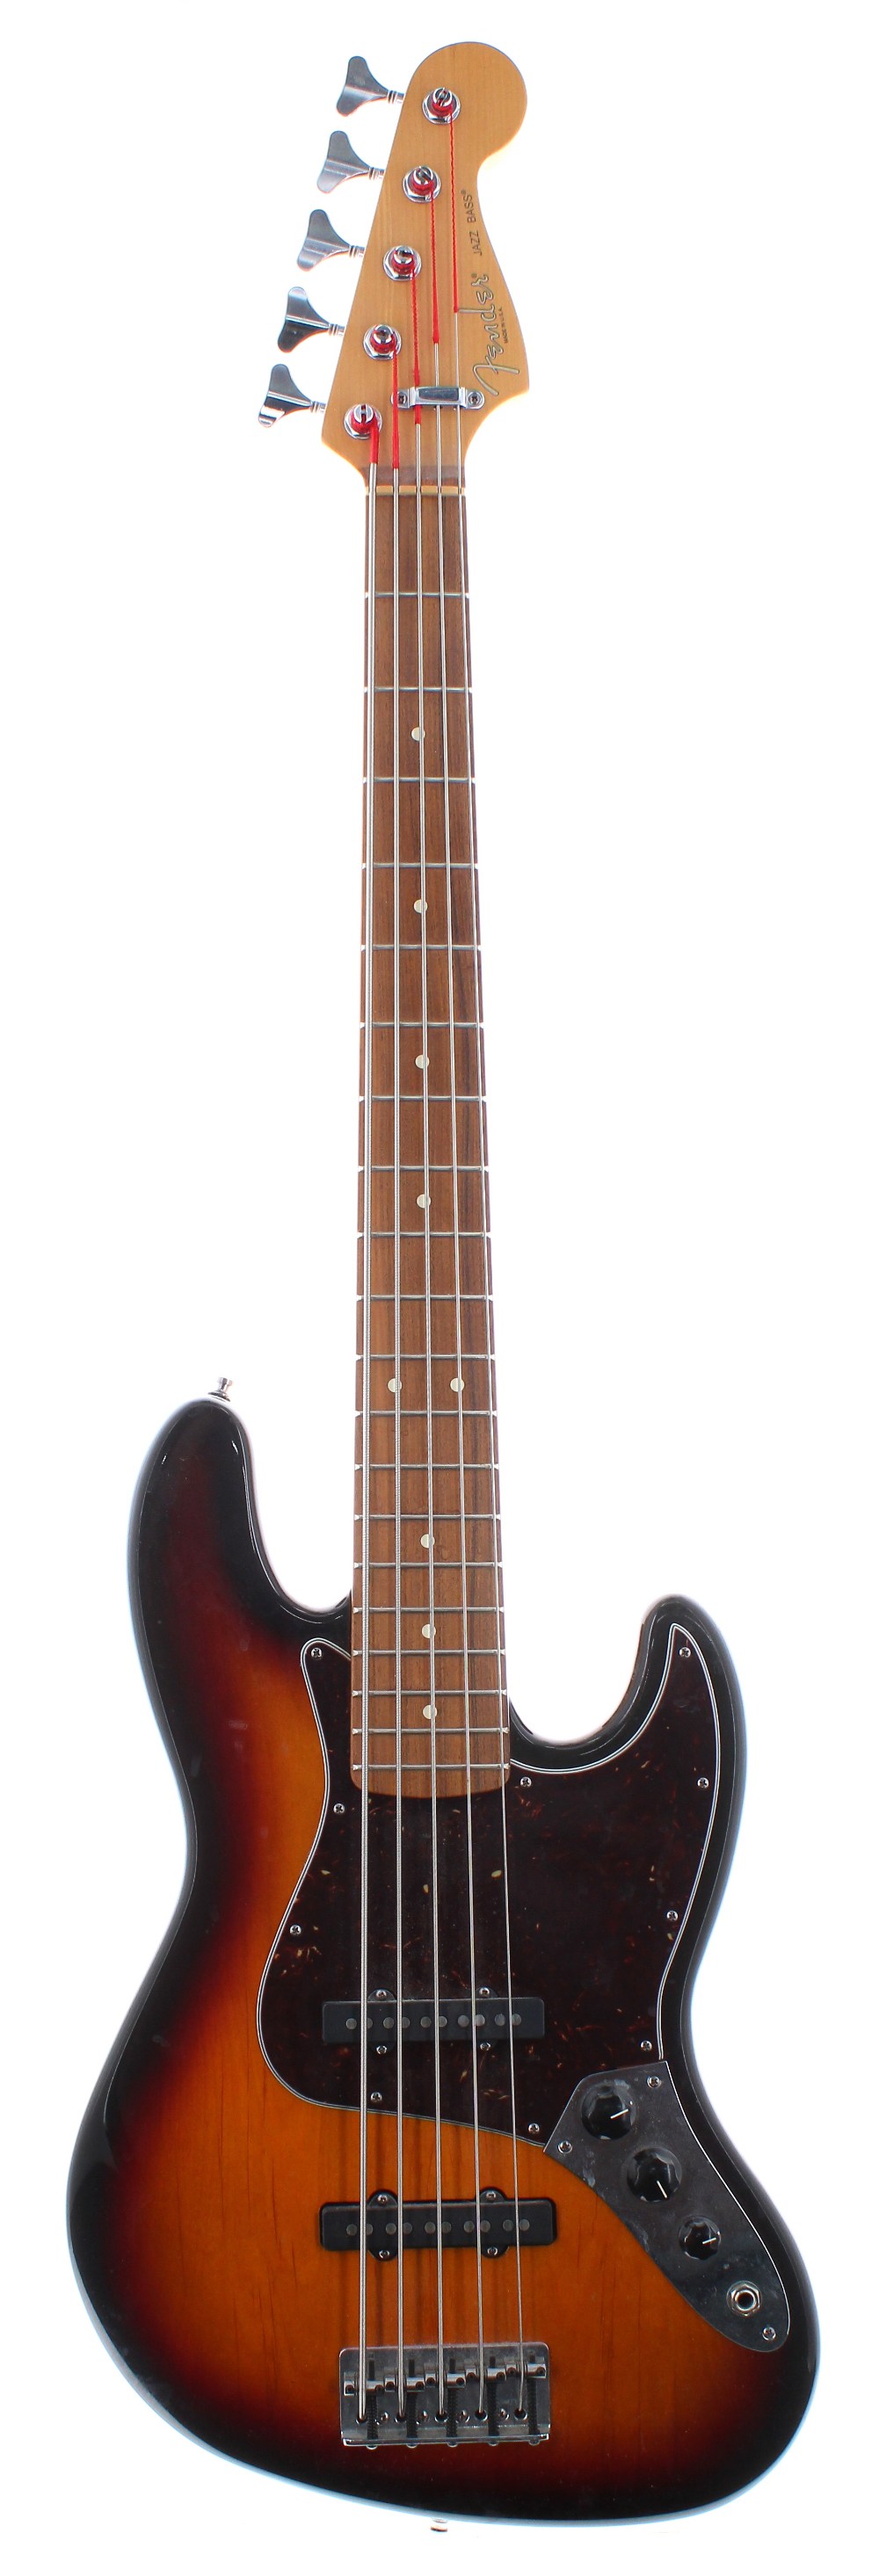 1997 Fender Jazz Bass V 5 string bass guitar, made in USA, ser. no. N7xxxxx8; Finish: sunburst,